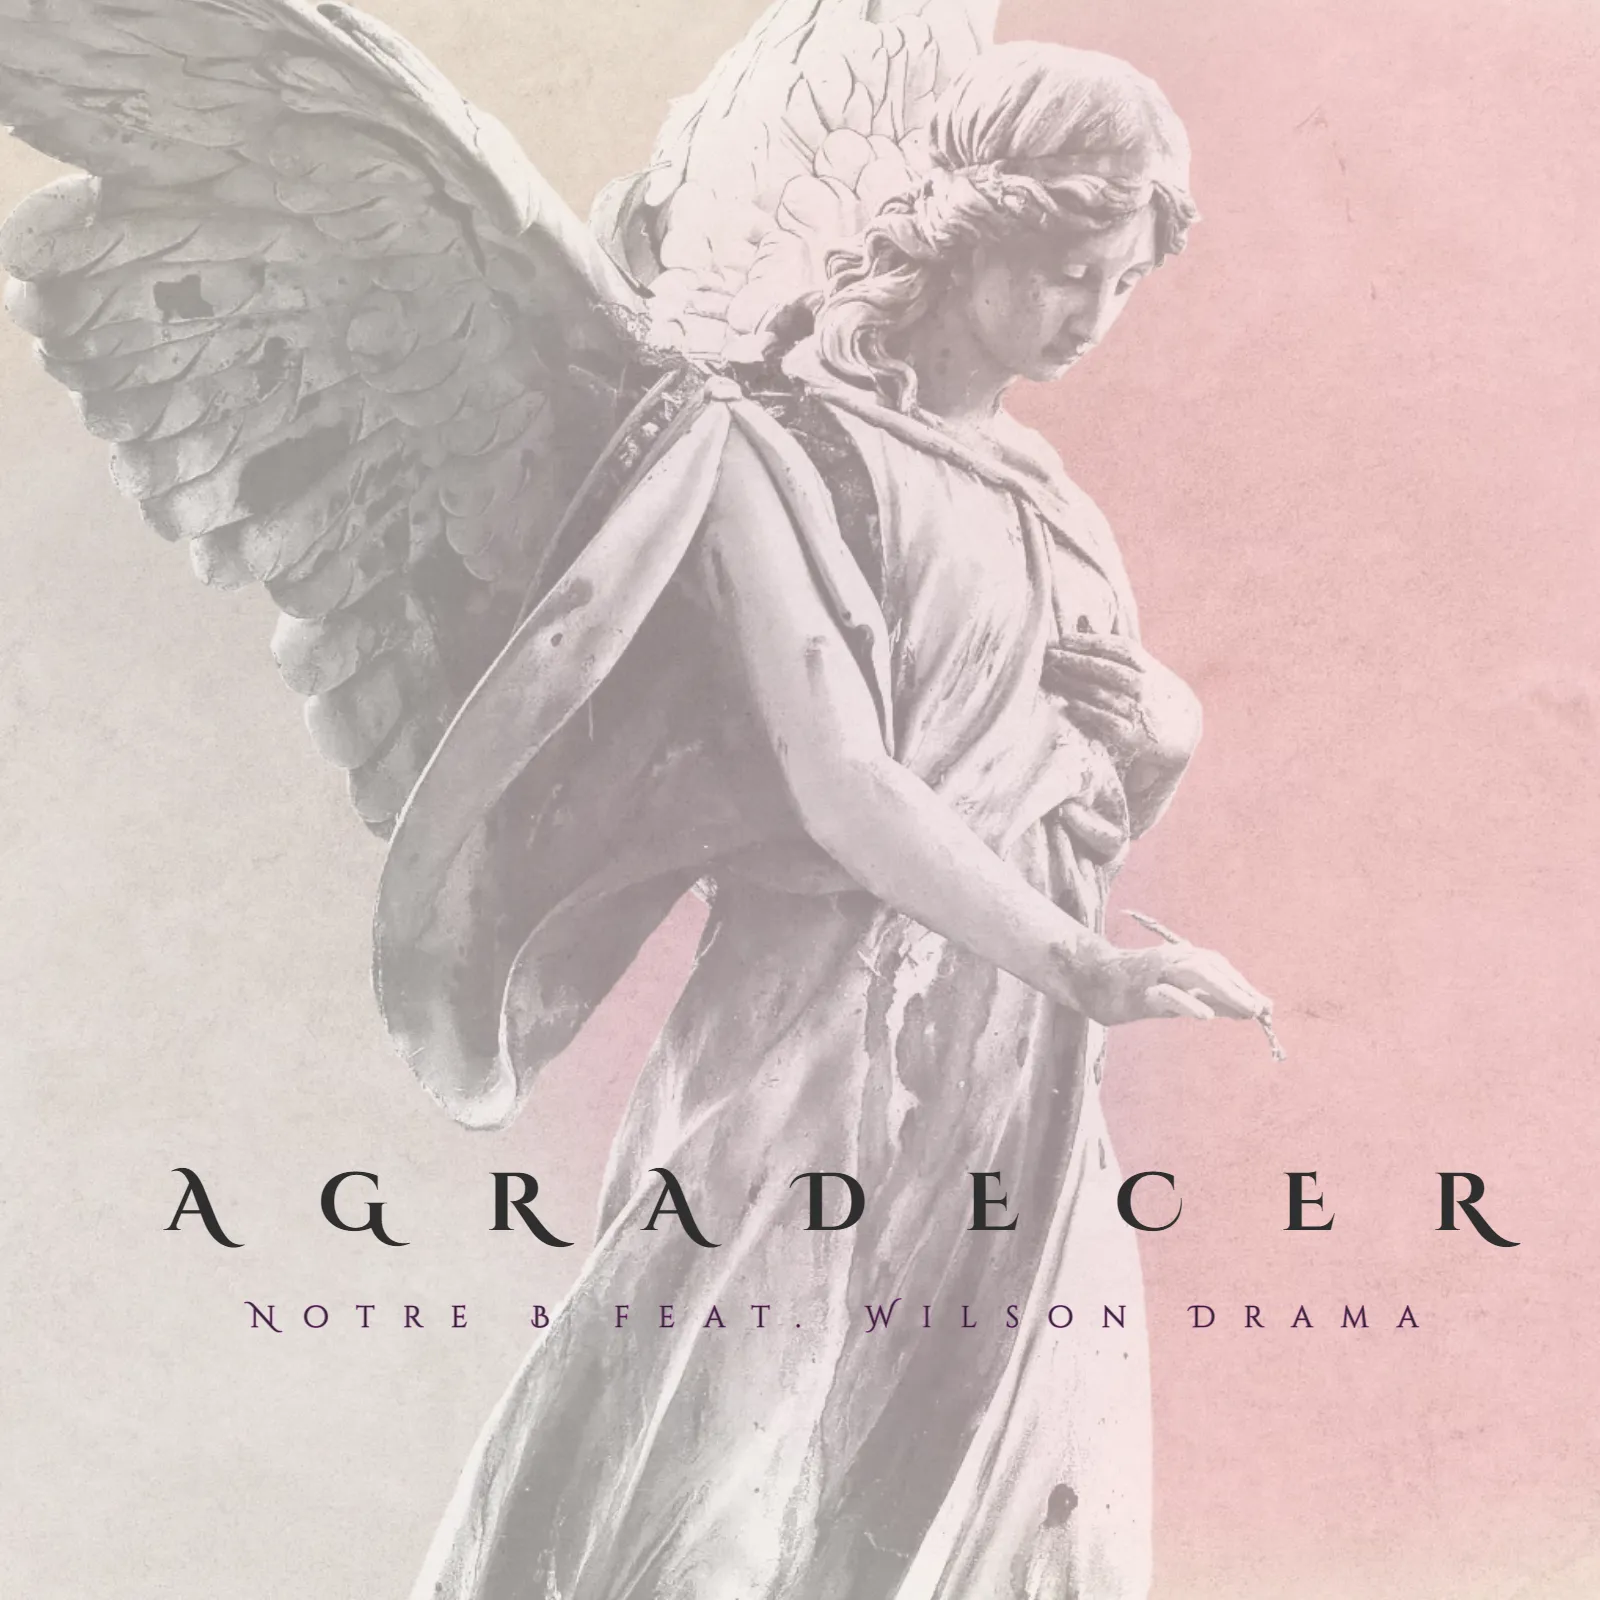 Notre B - Agradecer (Feat. Wilson Drama)